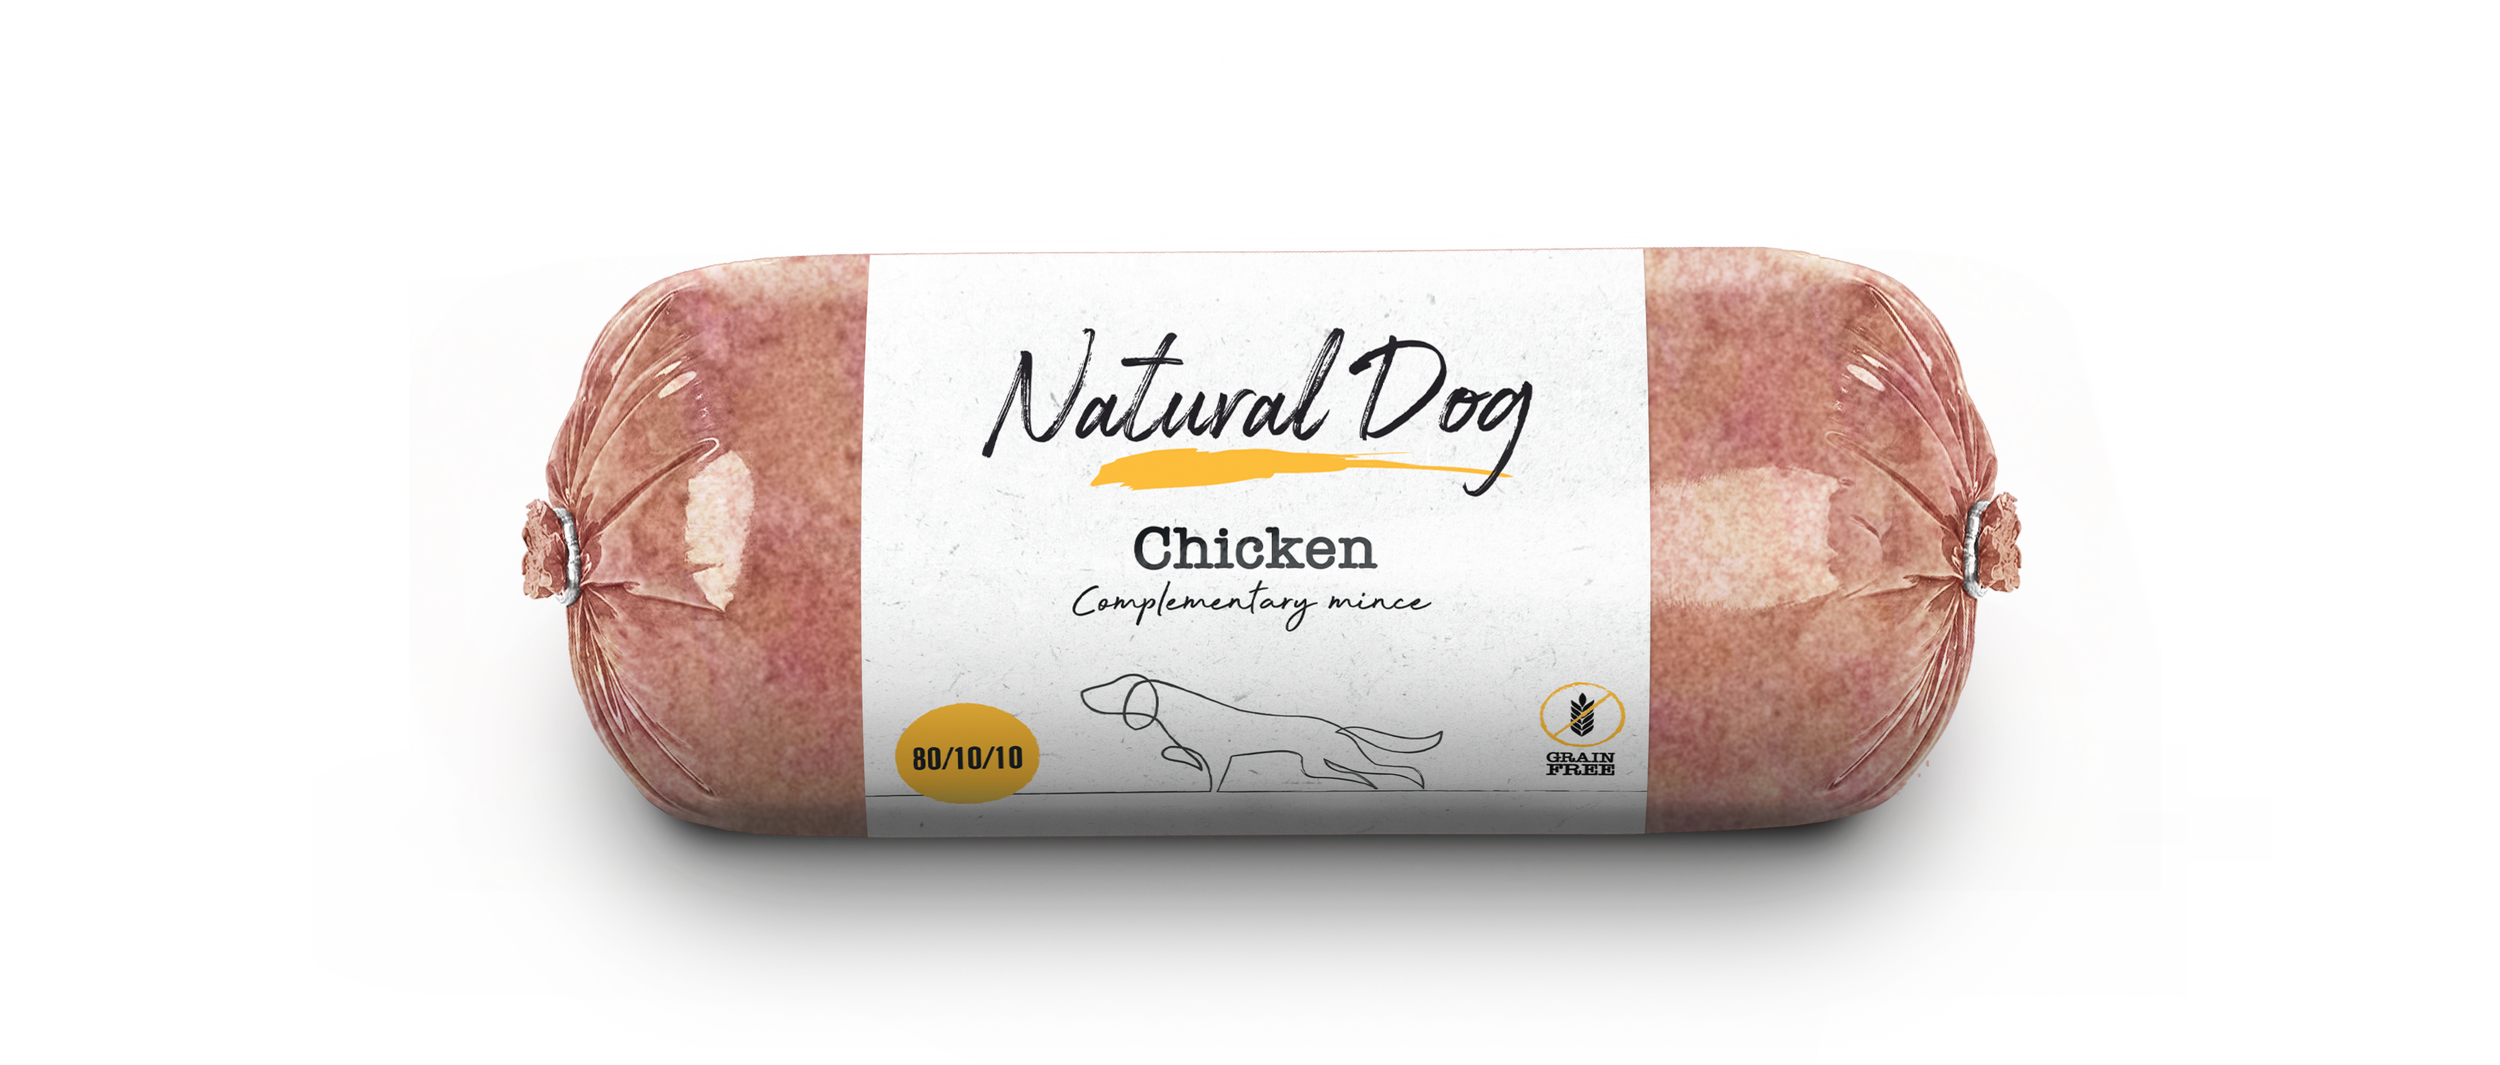 Natural Dog_Top down chub roll_Chicken.png